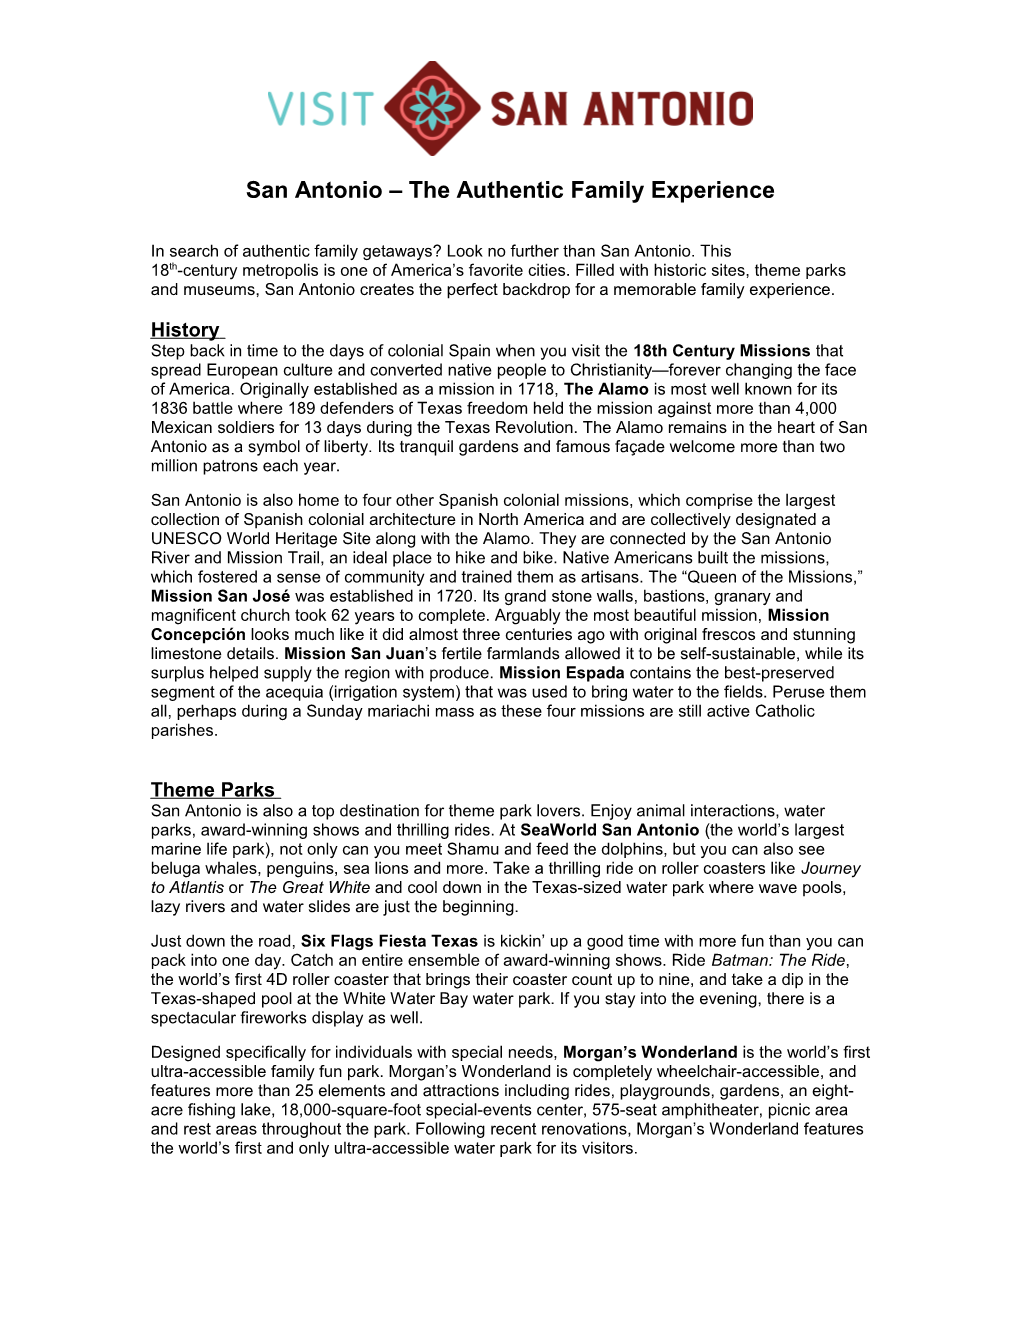 Top 10 San Antonio Family Experiences